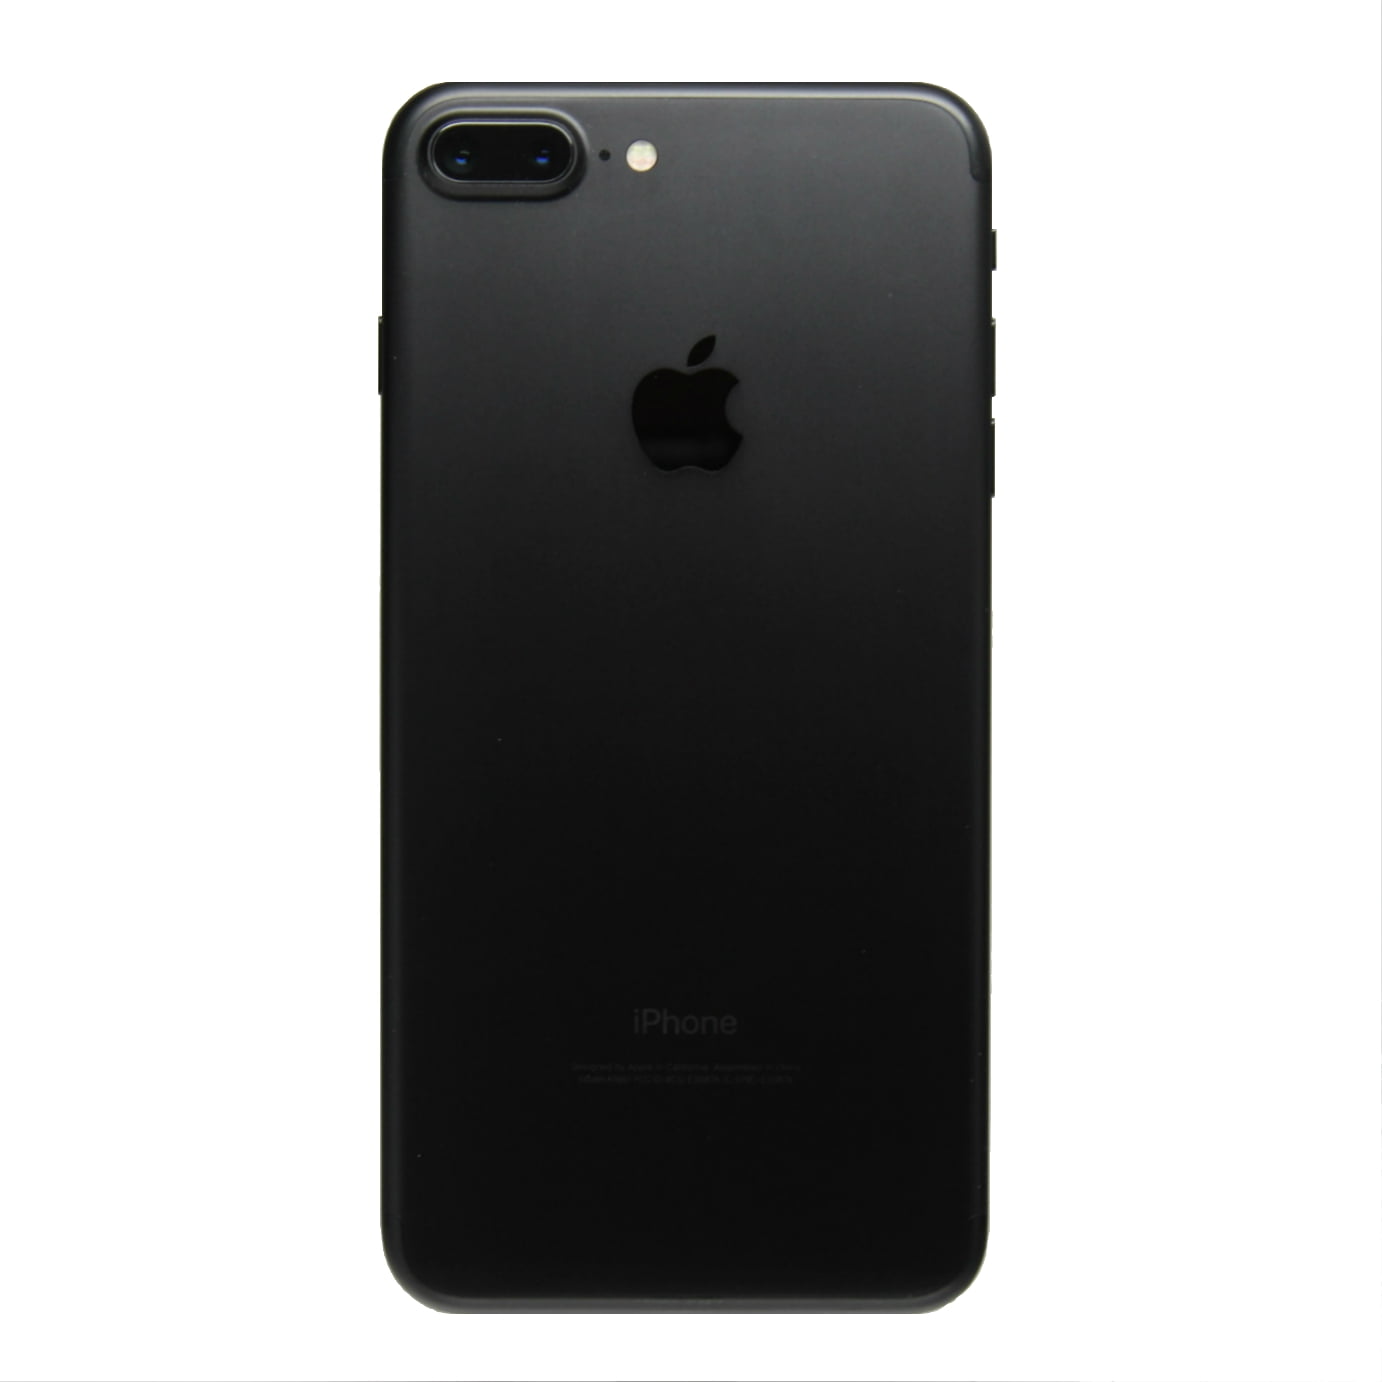 Apple iPhone 7 Plus - 128GB - Black (Unlocked) A1661 (CDMA + GSM) w/  accessories at Rs 8000/piece, Vasai Virar